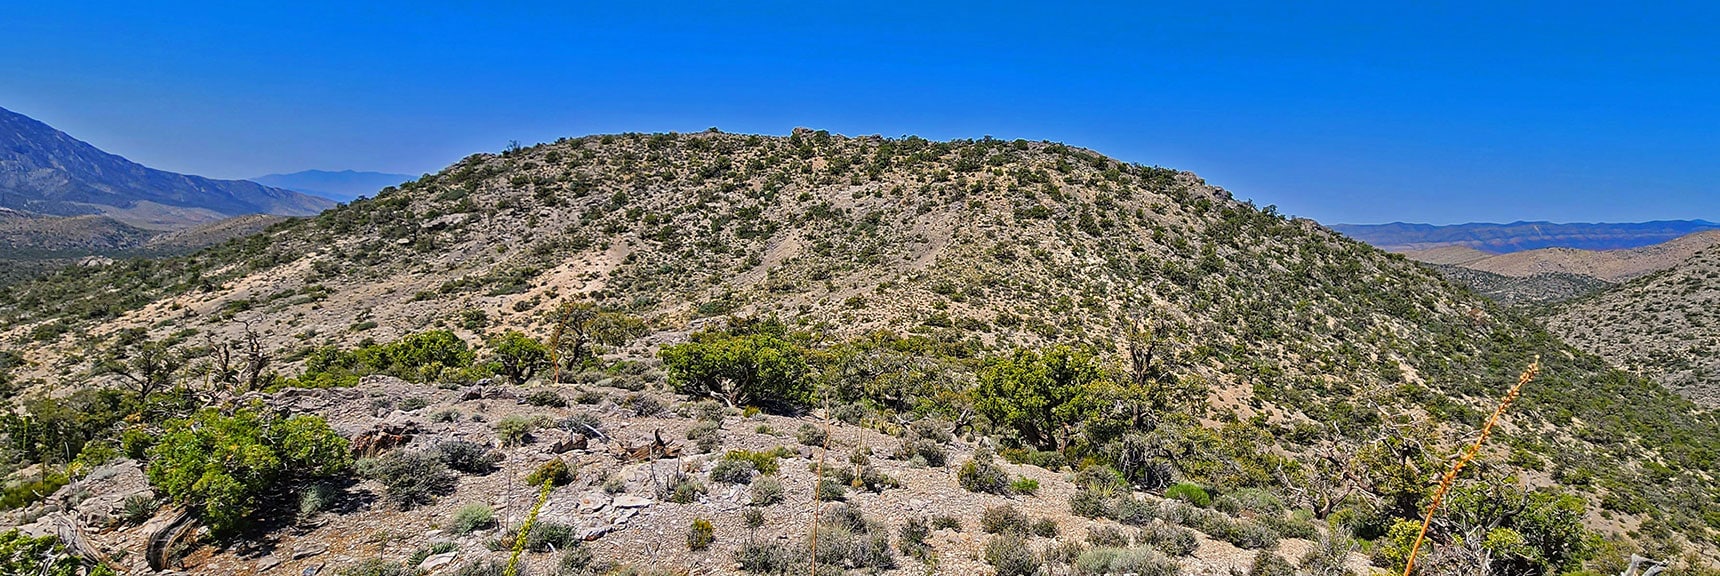 View from Upper Crest Ridgeline Back Across Saddle to Wolverine Ridge | Little Zion | Rainbow Mountain Wilderness, Nevada